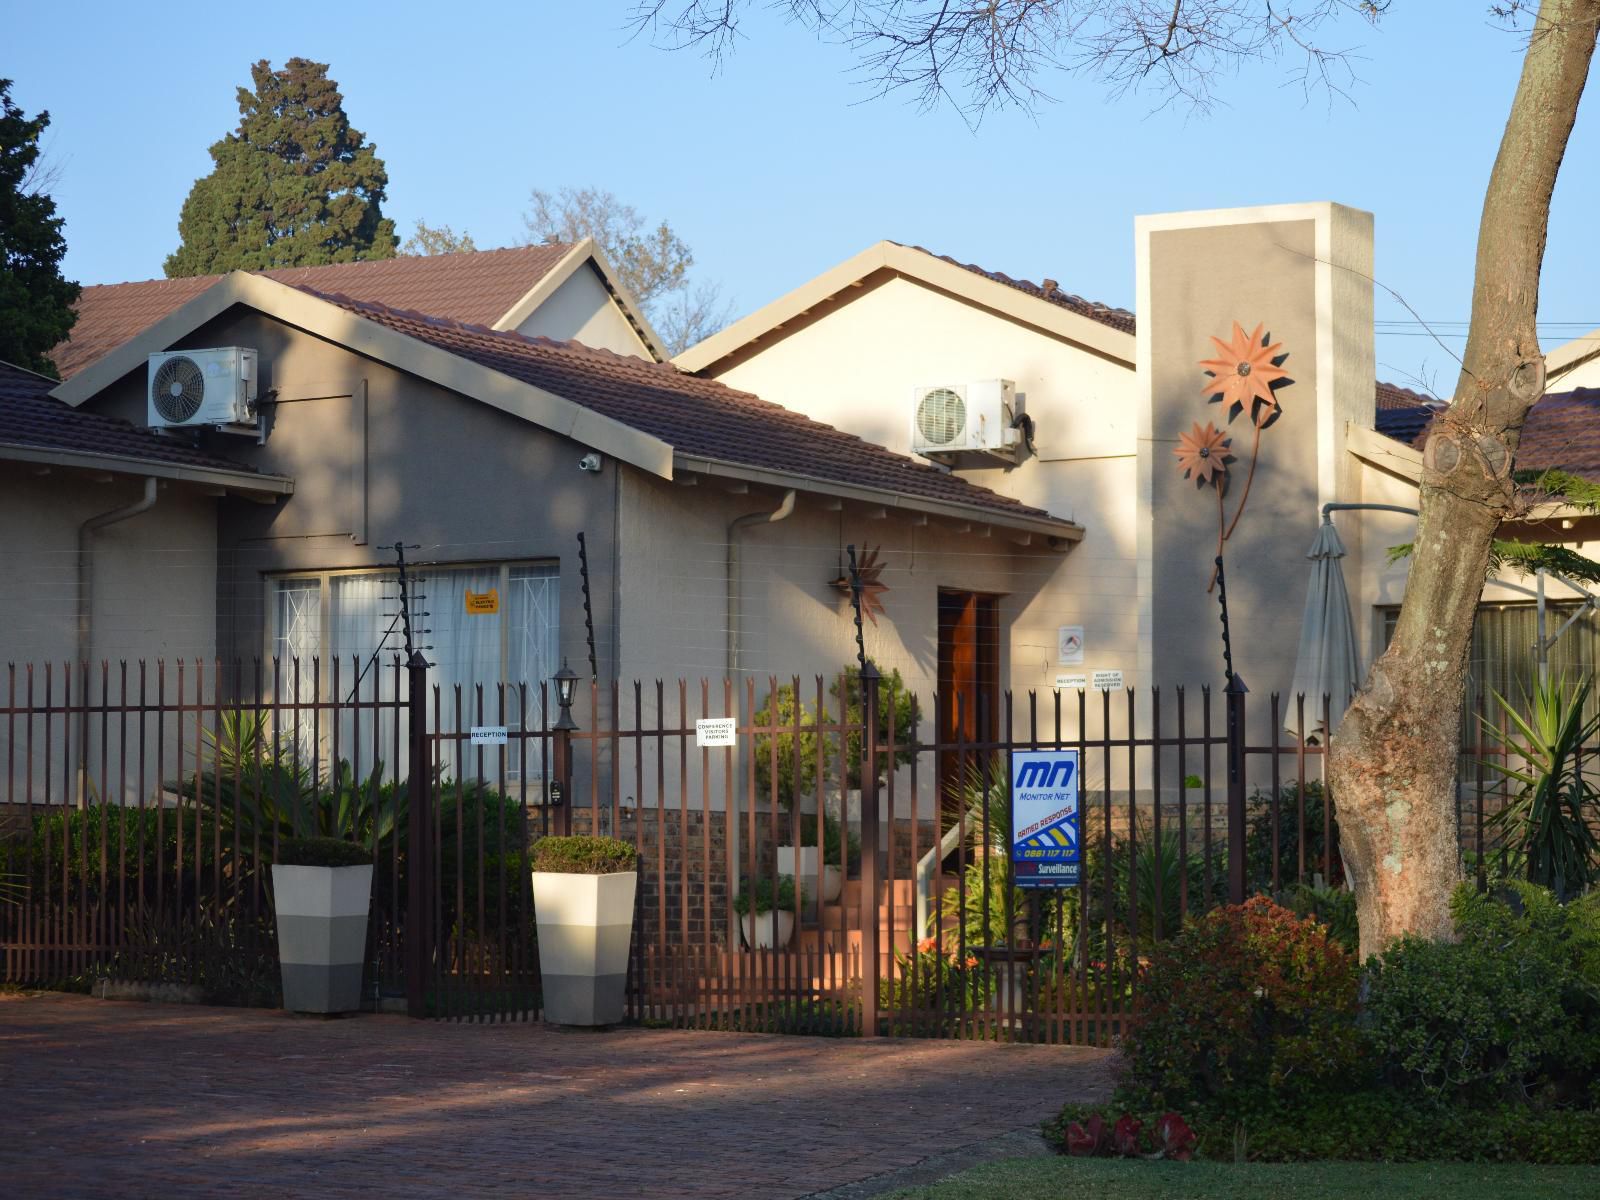 Aandbloem Guest House Eldoraigne Centurion Gauteng South Africa House, Building, Architecture